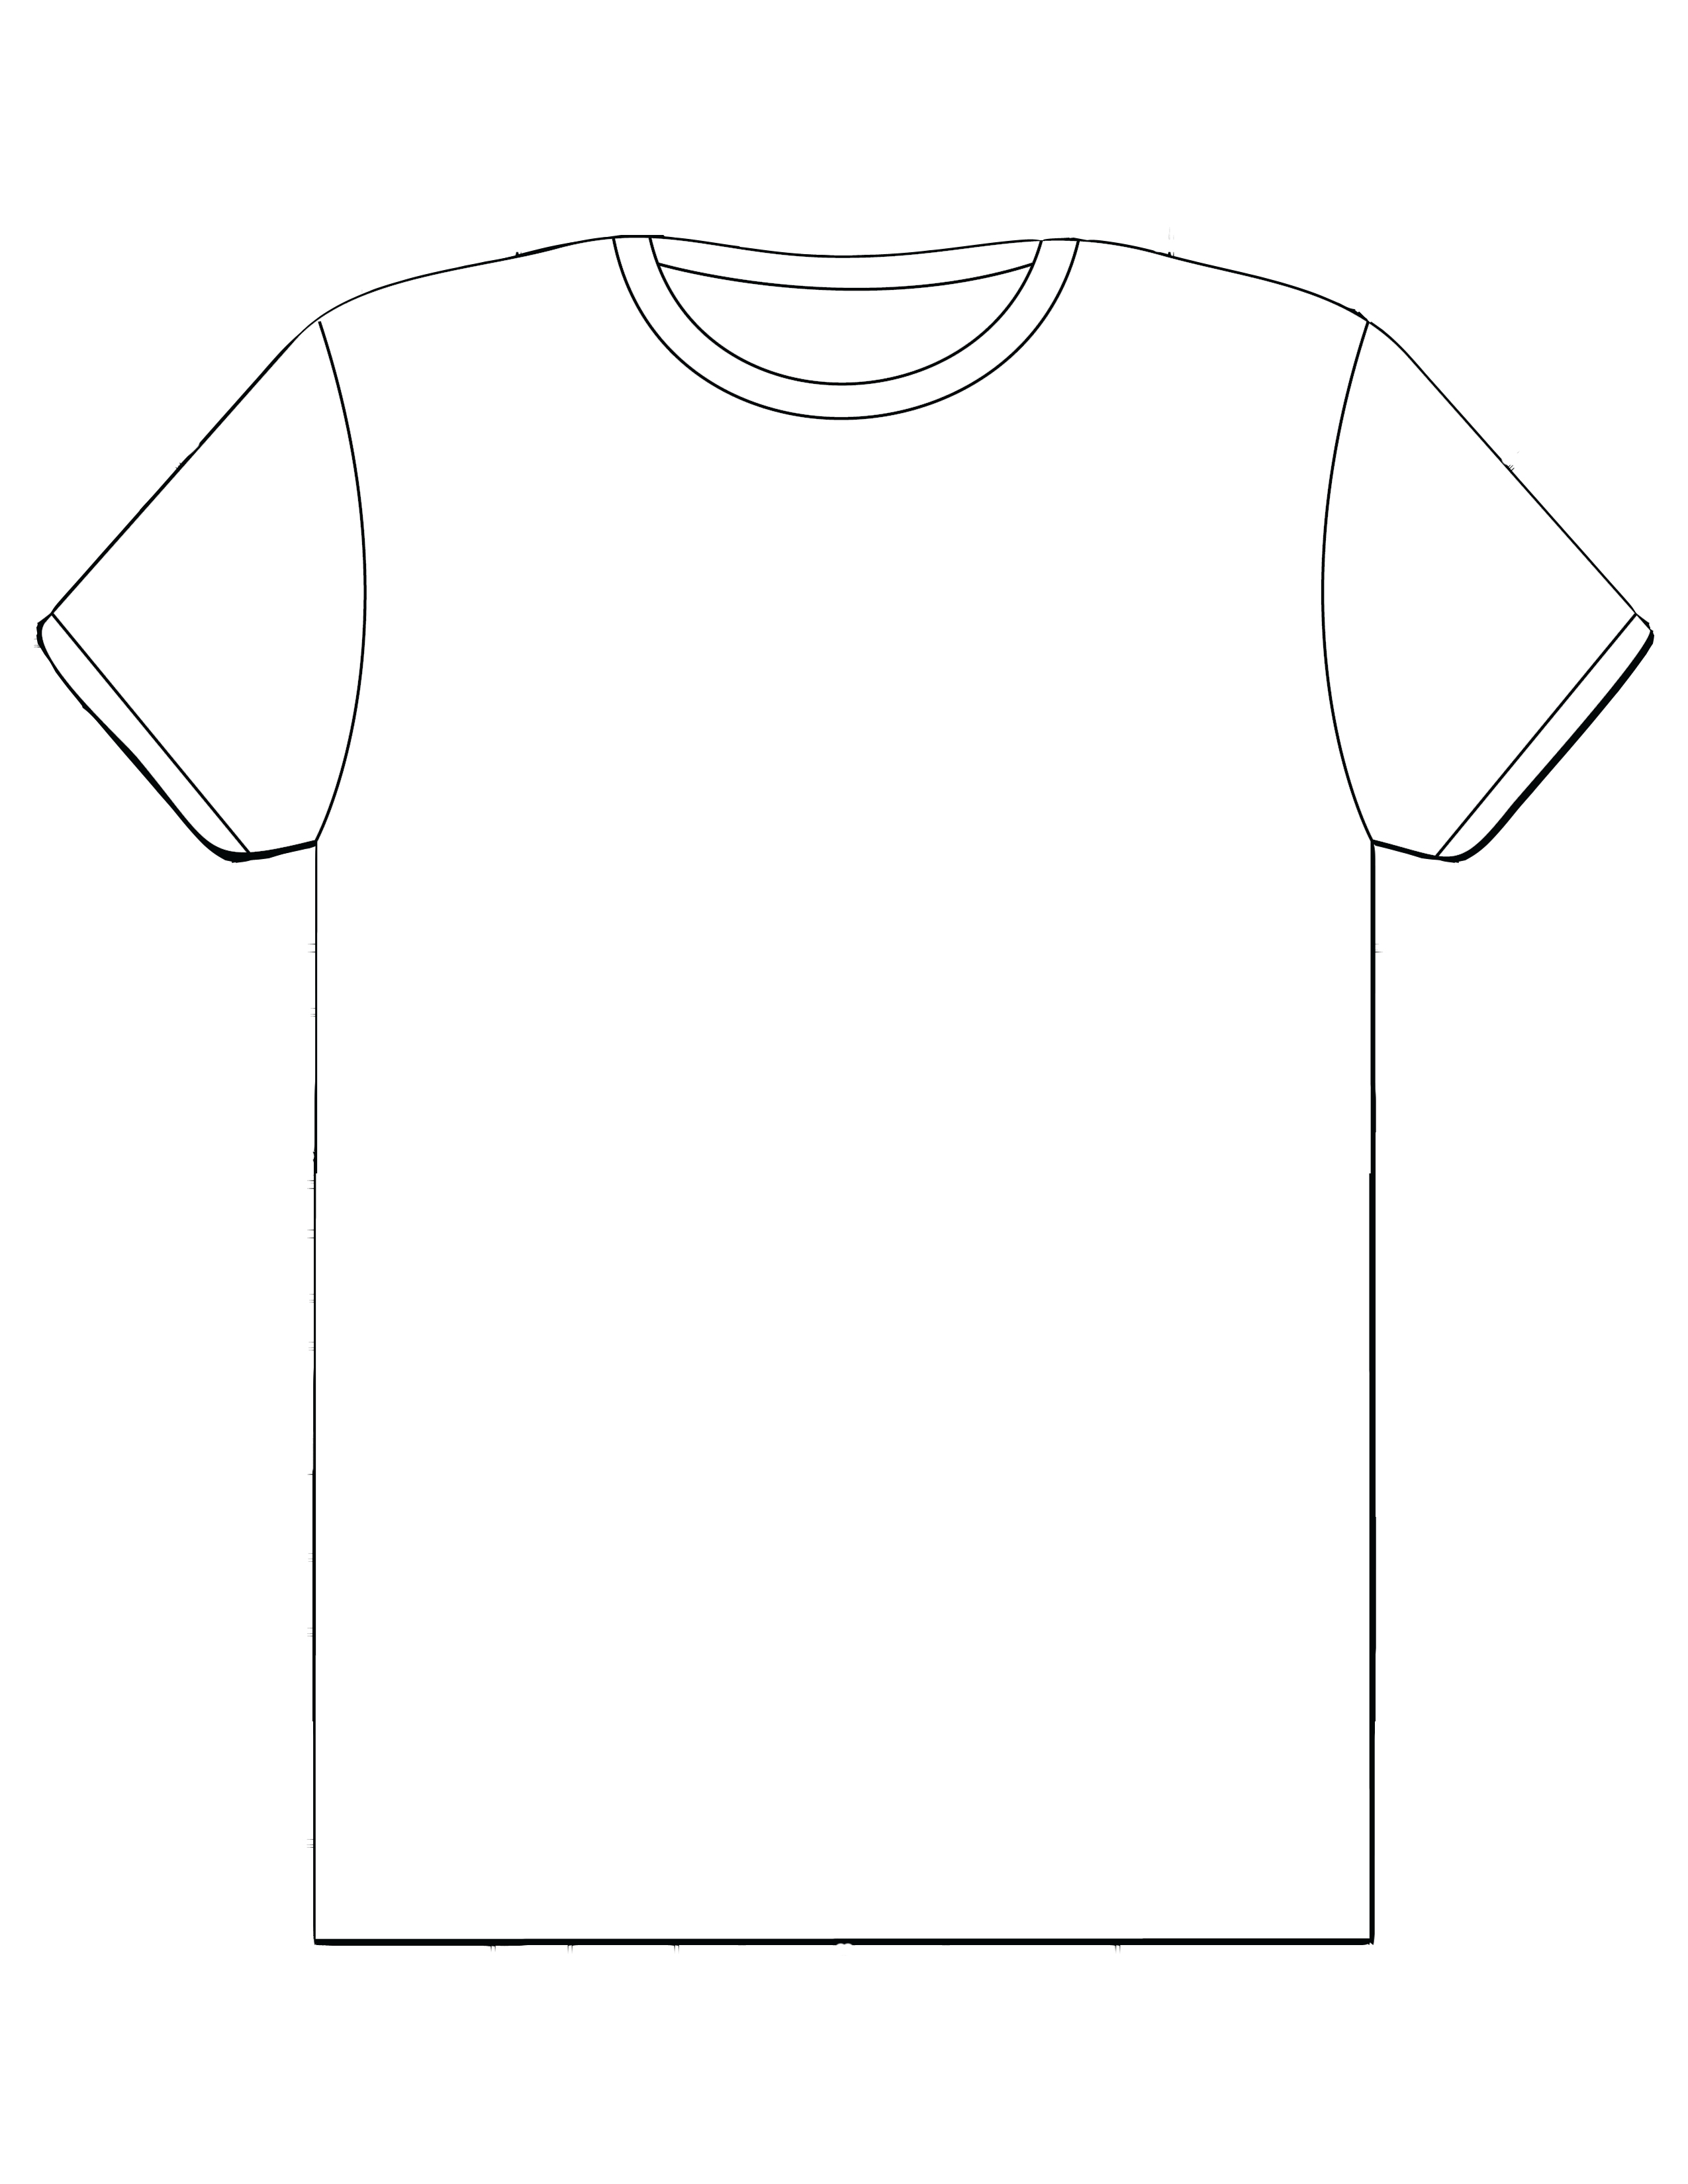 19 Free Blank T Shirt Template Designs – UCreative.| my 